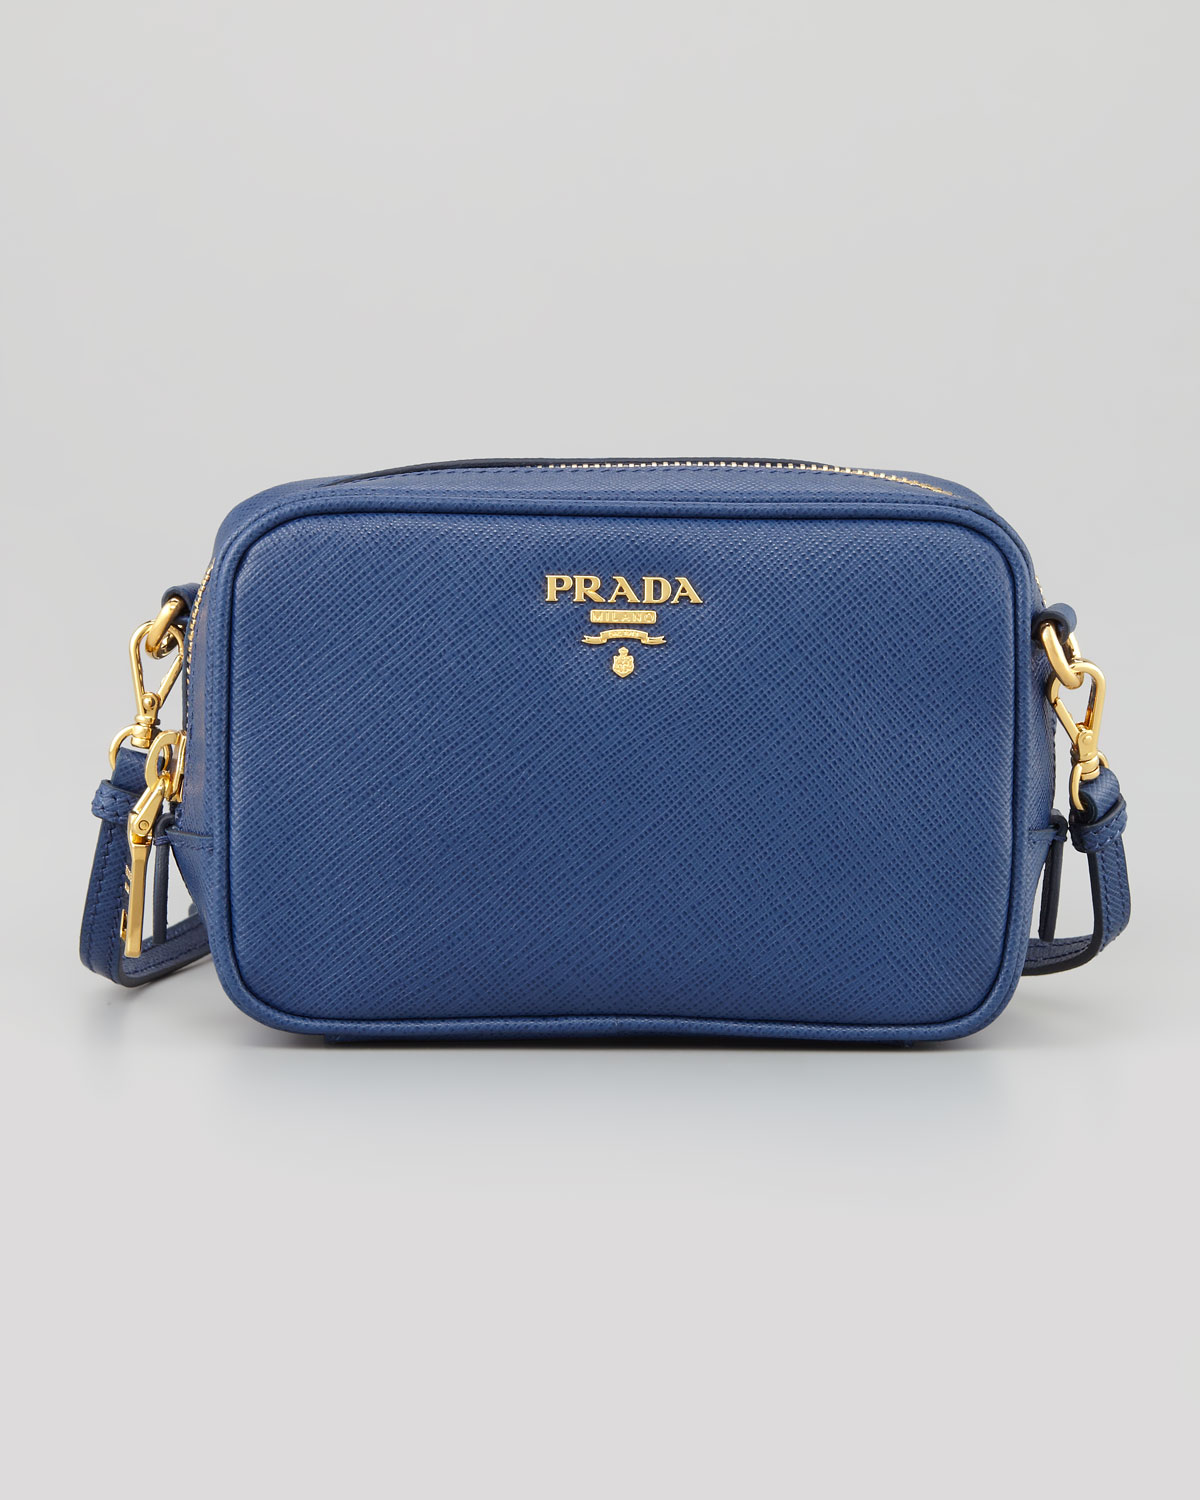 Lyst - Prada Saffiano Mini Zip Crossbody Bag in Blue